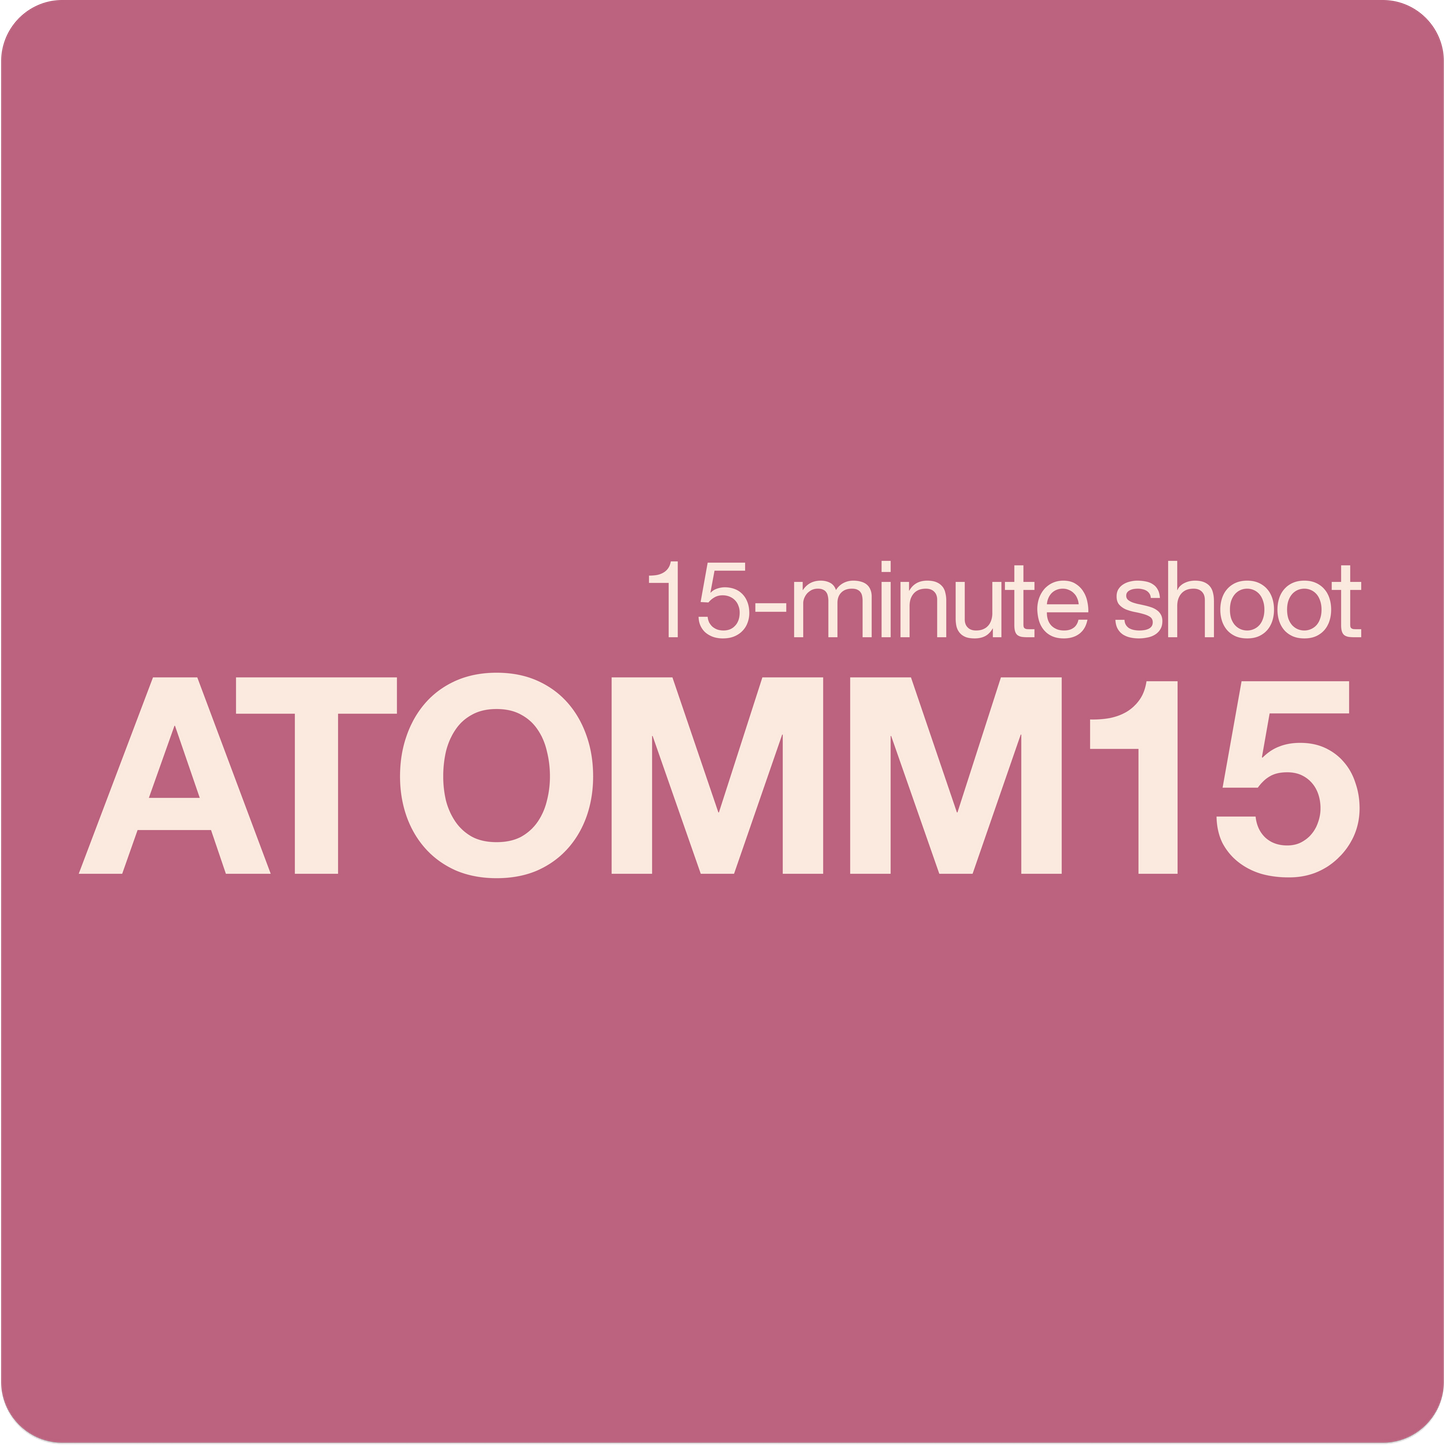 ATOMM15 (15-minute shoot)